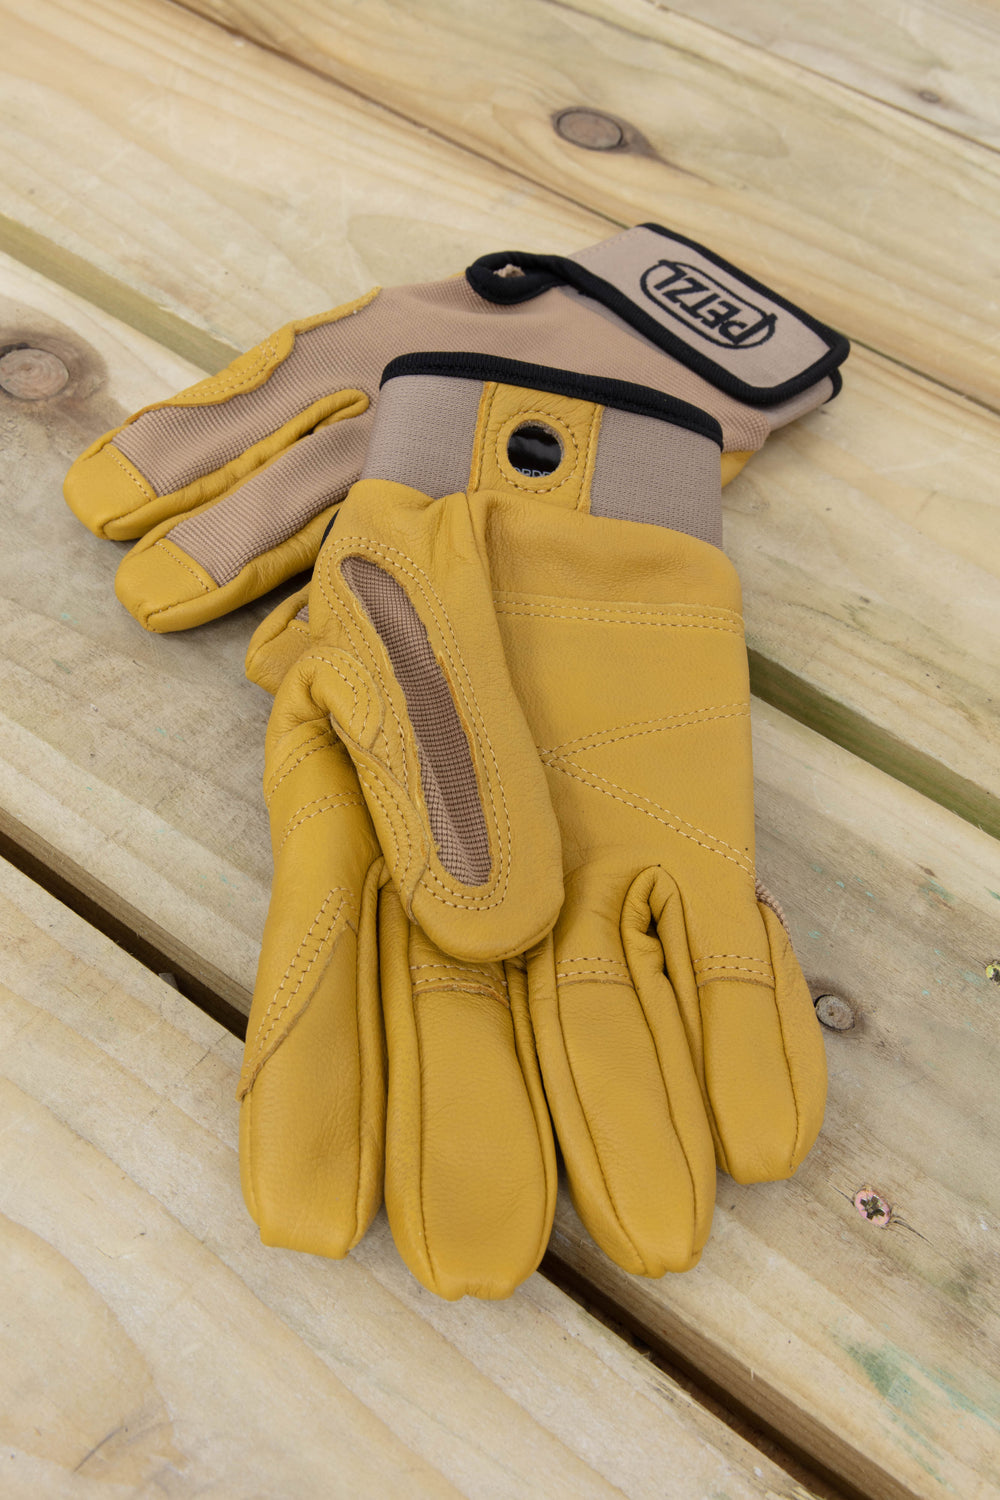 Petzl - Cordex Gloves